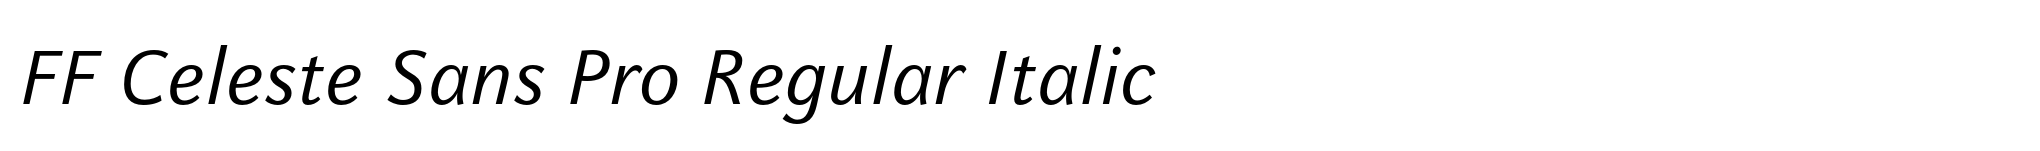 FF Celeste Sans Pro Regular Italic image